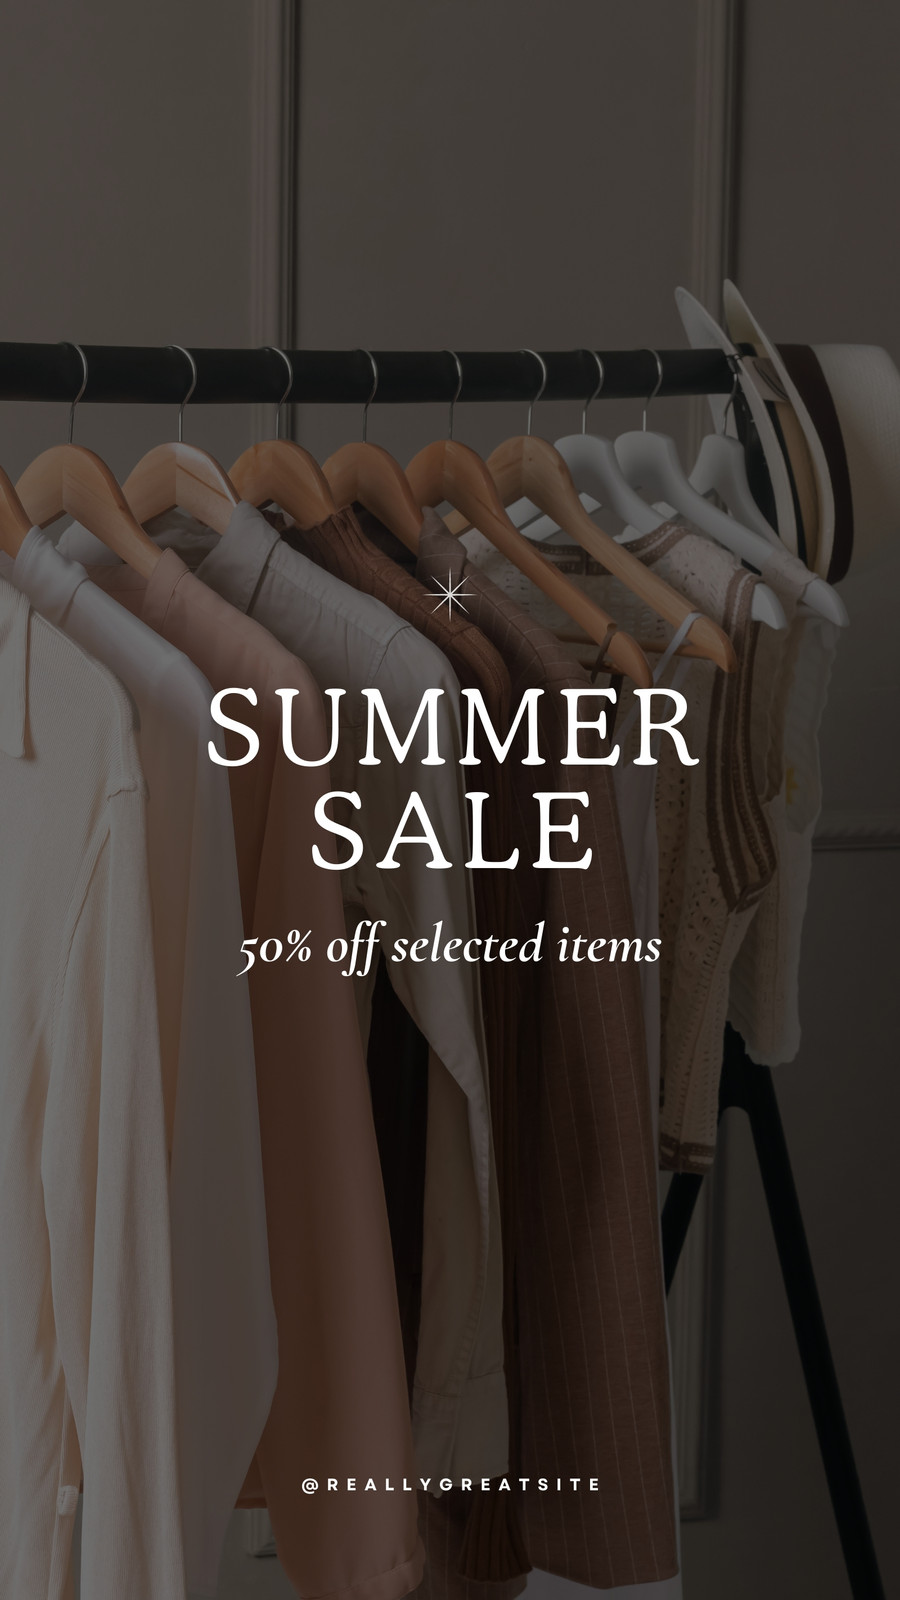 https://marketplace.canva.com/EAFrp7ygKJY/1/0/900w/canva-white-minimal-summer-sale-discount-clothes-instagram-story-zP_tr3h-vEM.jpg